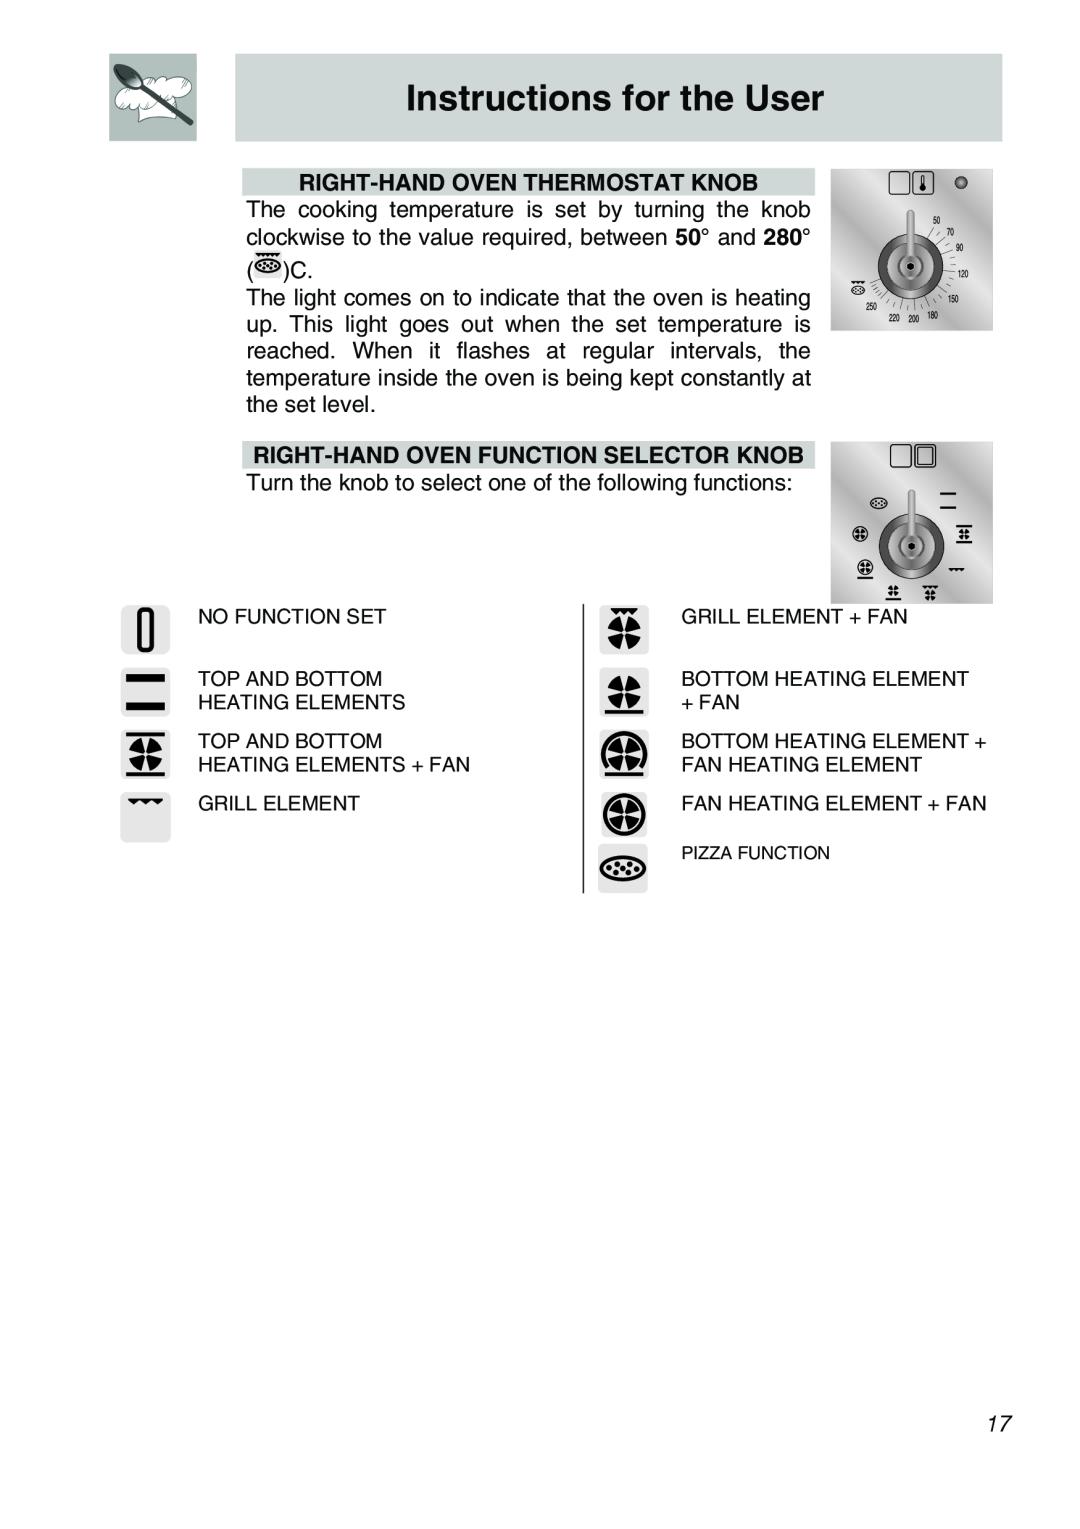 Smeg CSA150X-6 manual Right-Handoven Thermostat Knob, Right-Handoven Function Selector Knob, Instructions for the User 